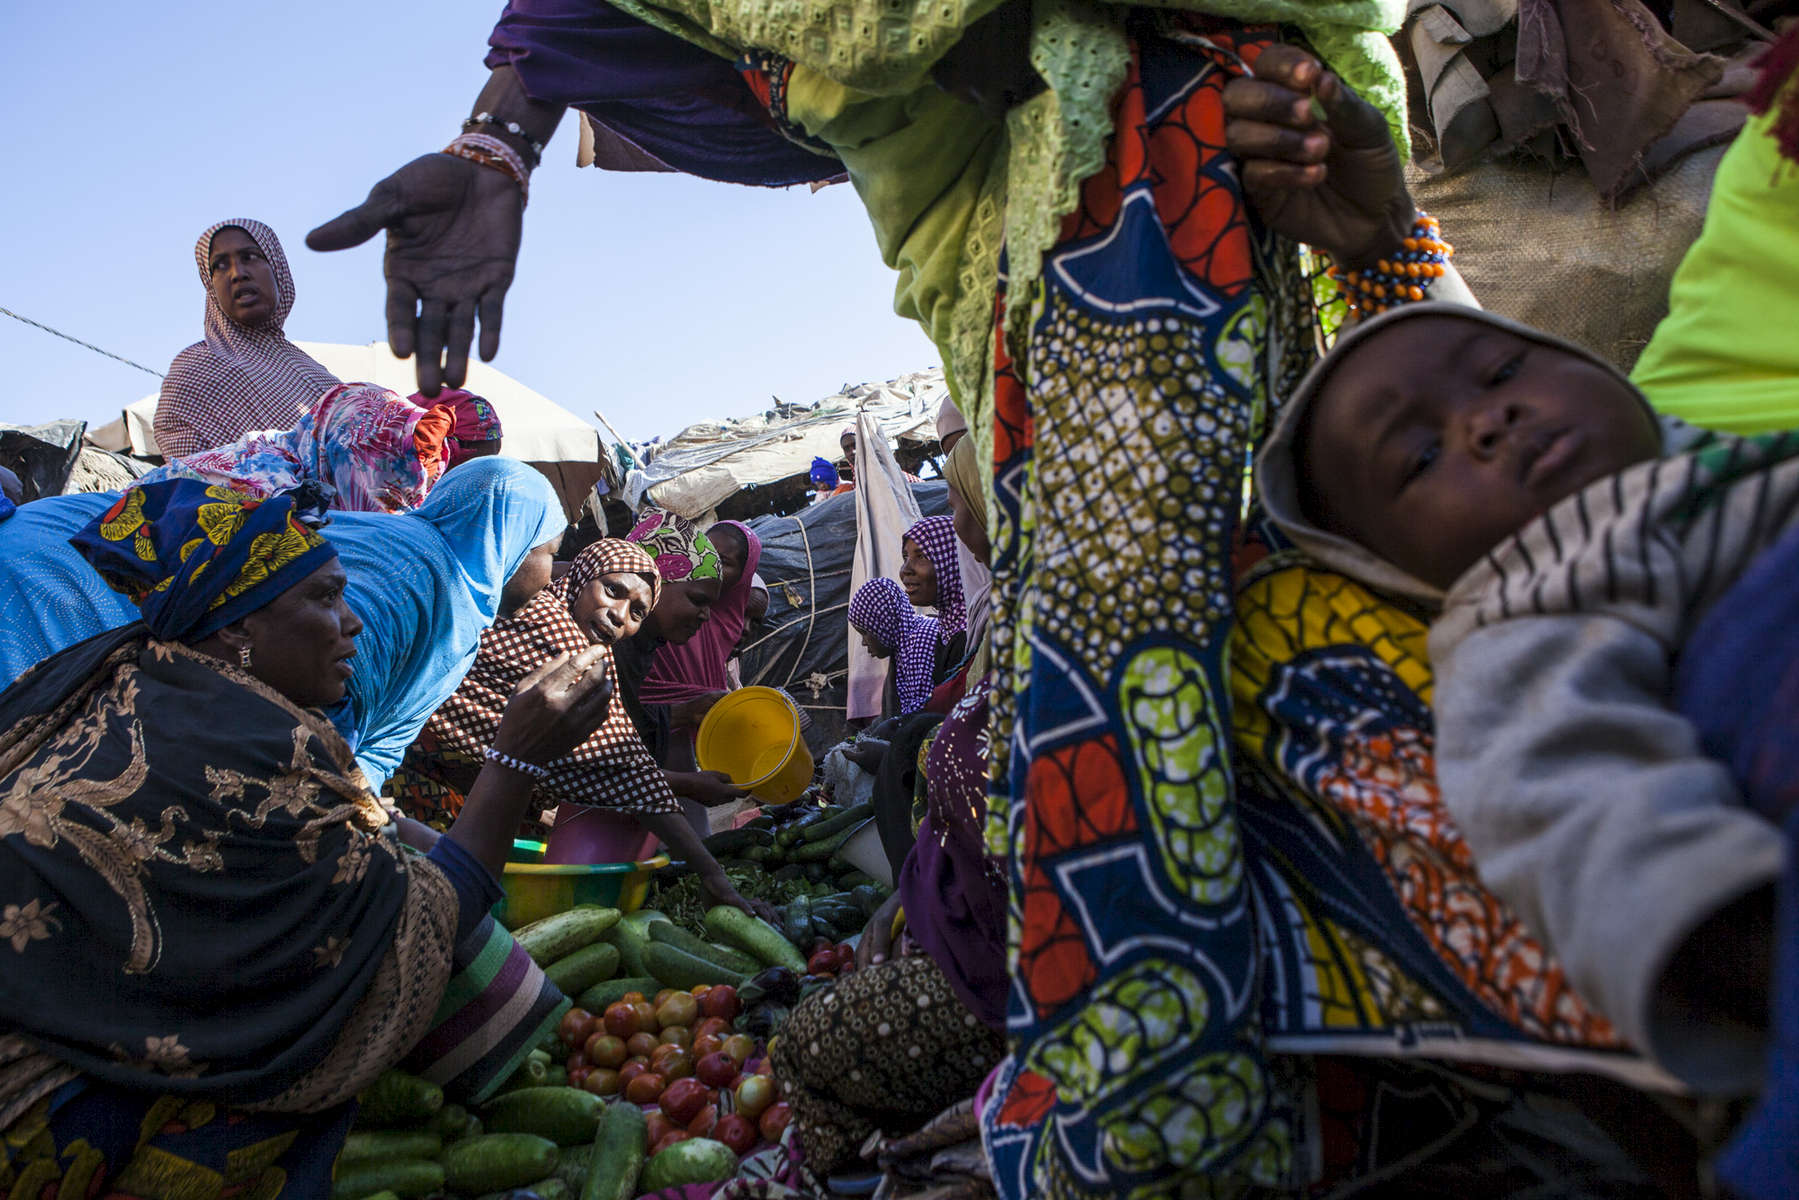 Women buy fresh produce at the market in Gao, Mali on Sunday, January 15, 2017.